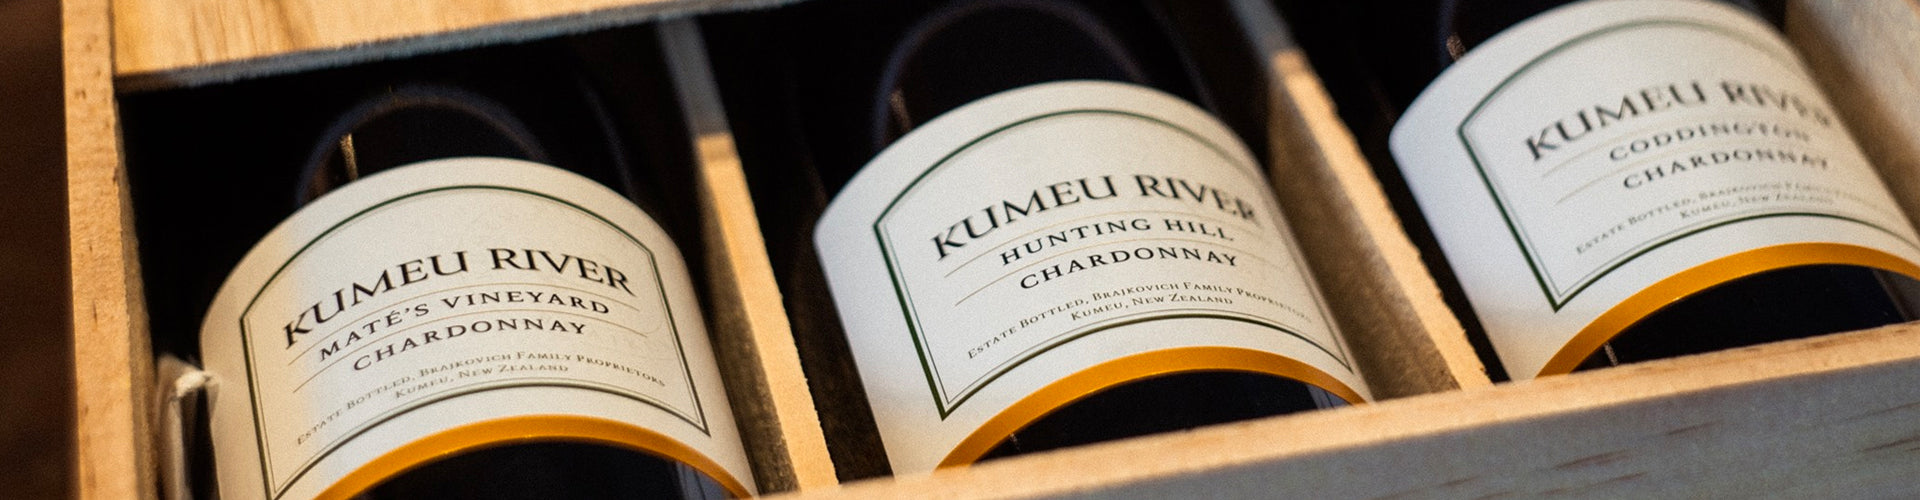 Display Gift Box of Kumeu River Chardonnay's - Maté's Vineyard, Hunting Hill & Coddington